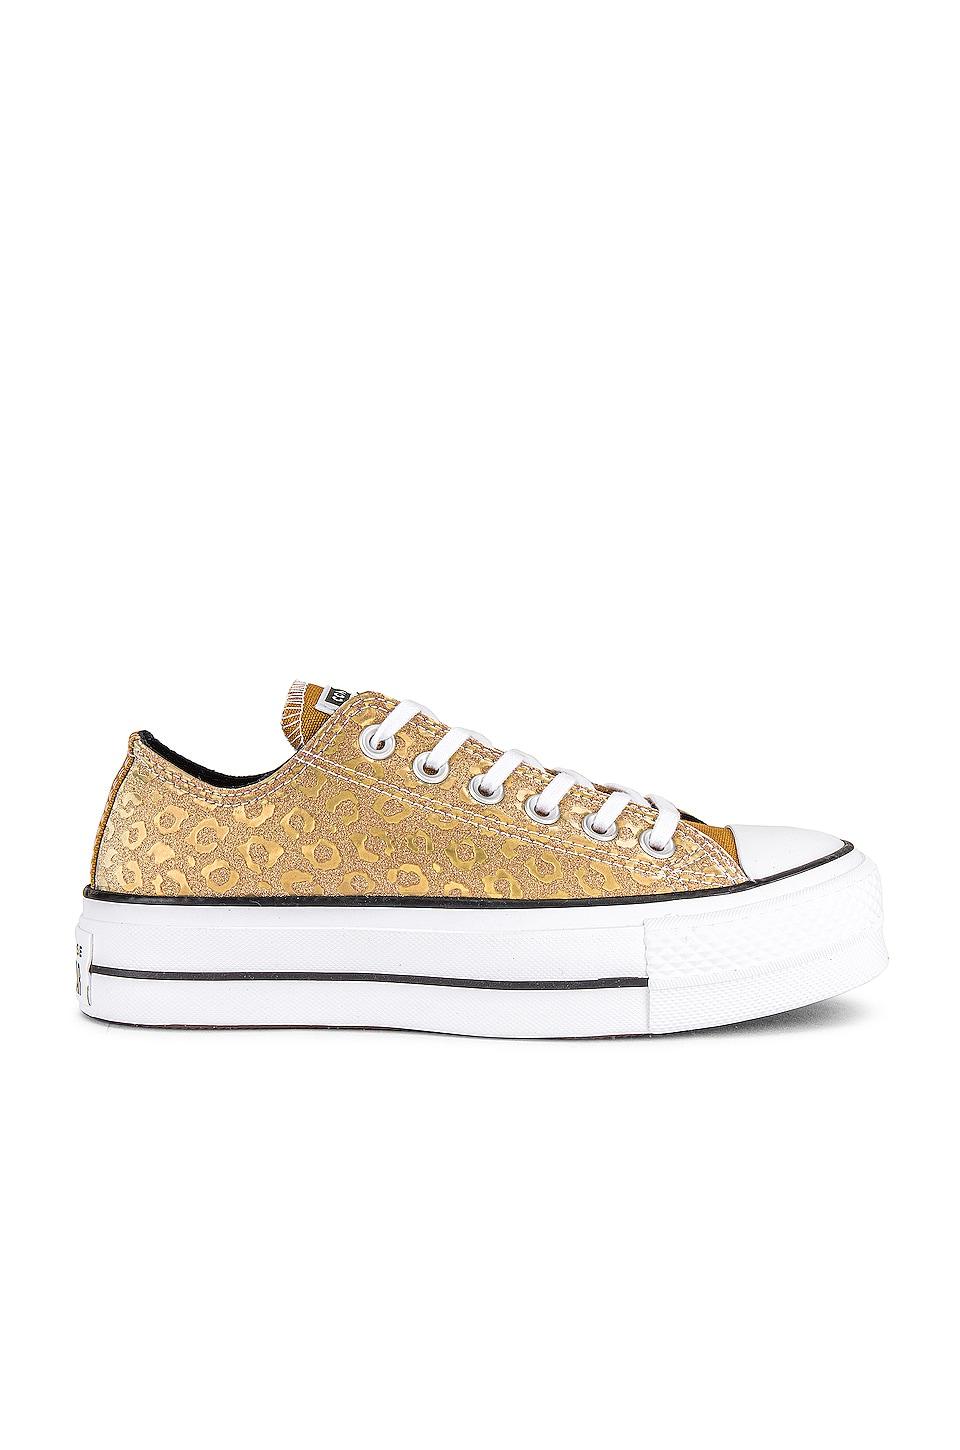 Converse Chuck Taylor All Star Leopard Glitter Platform Sneaker in Metallic  | Lyst